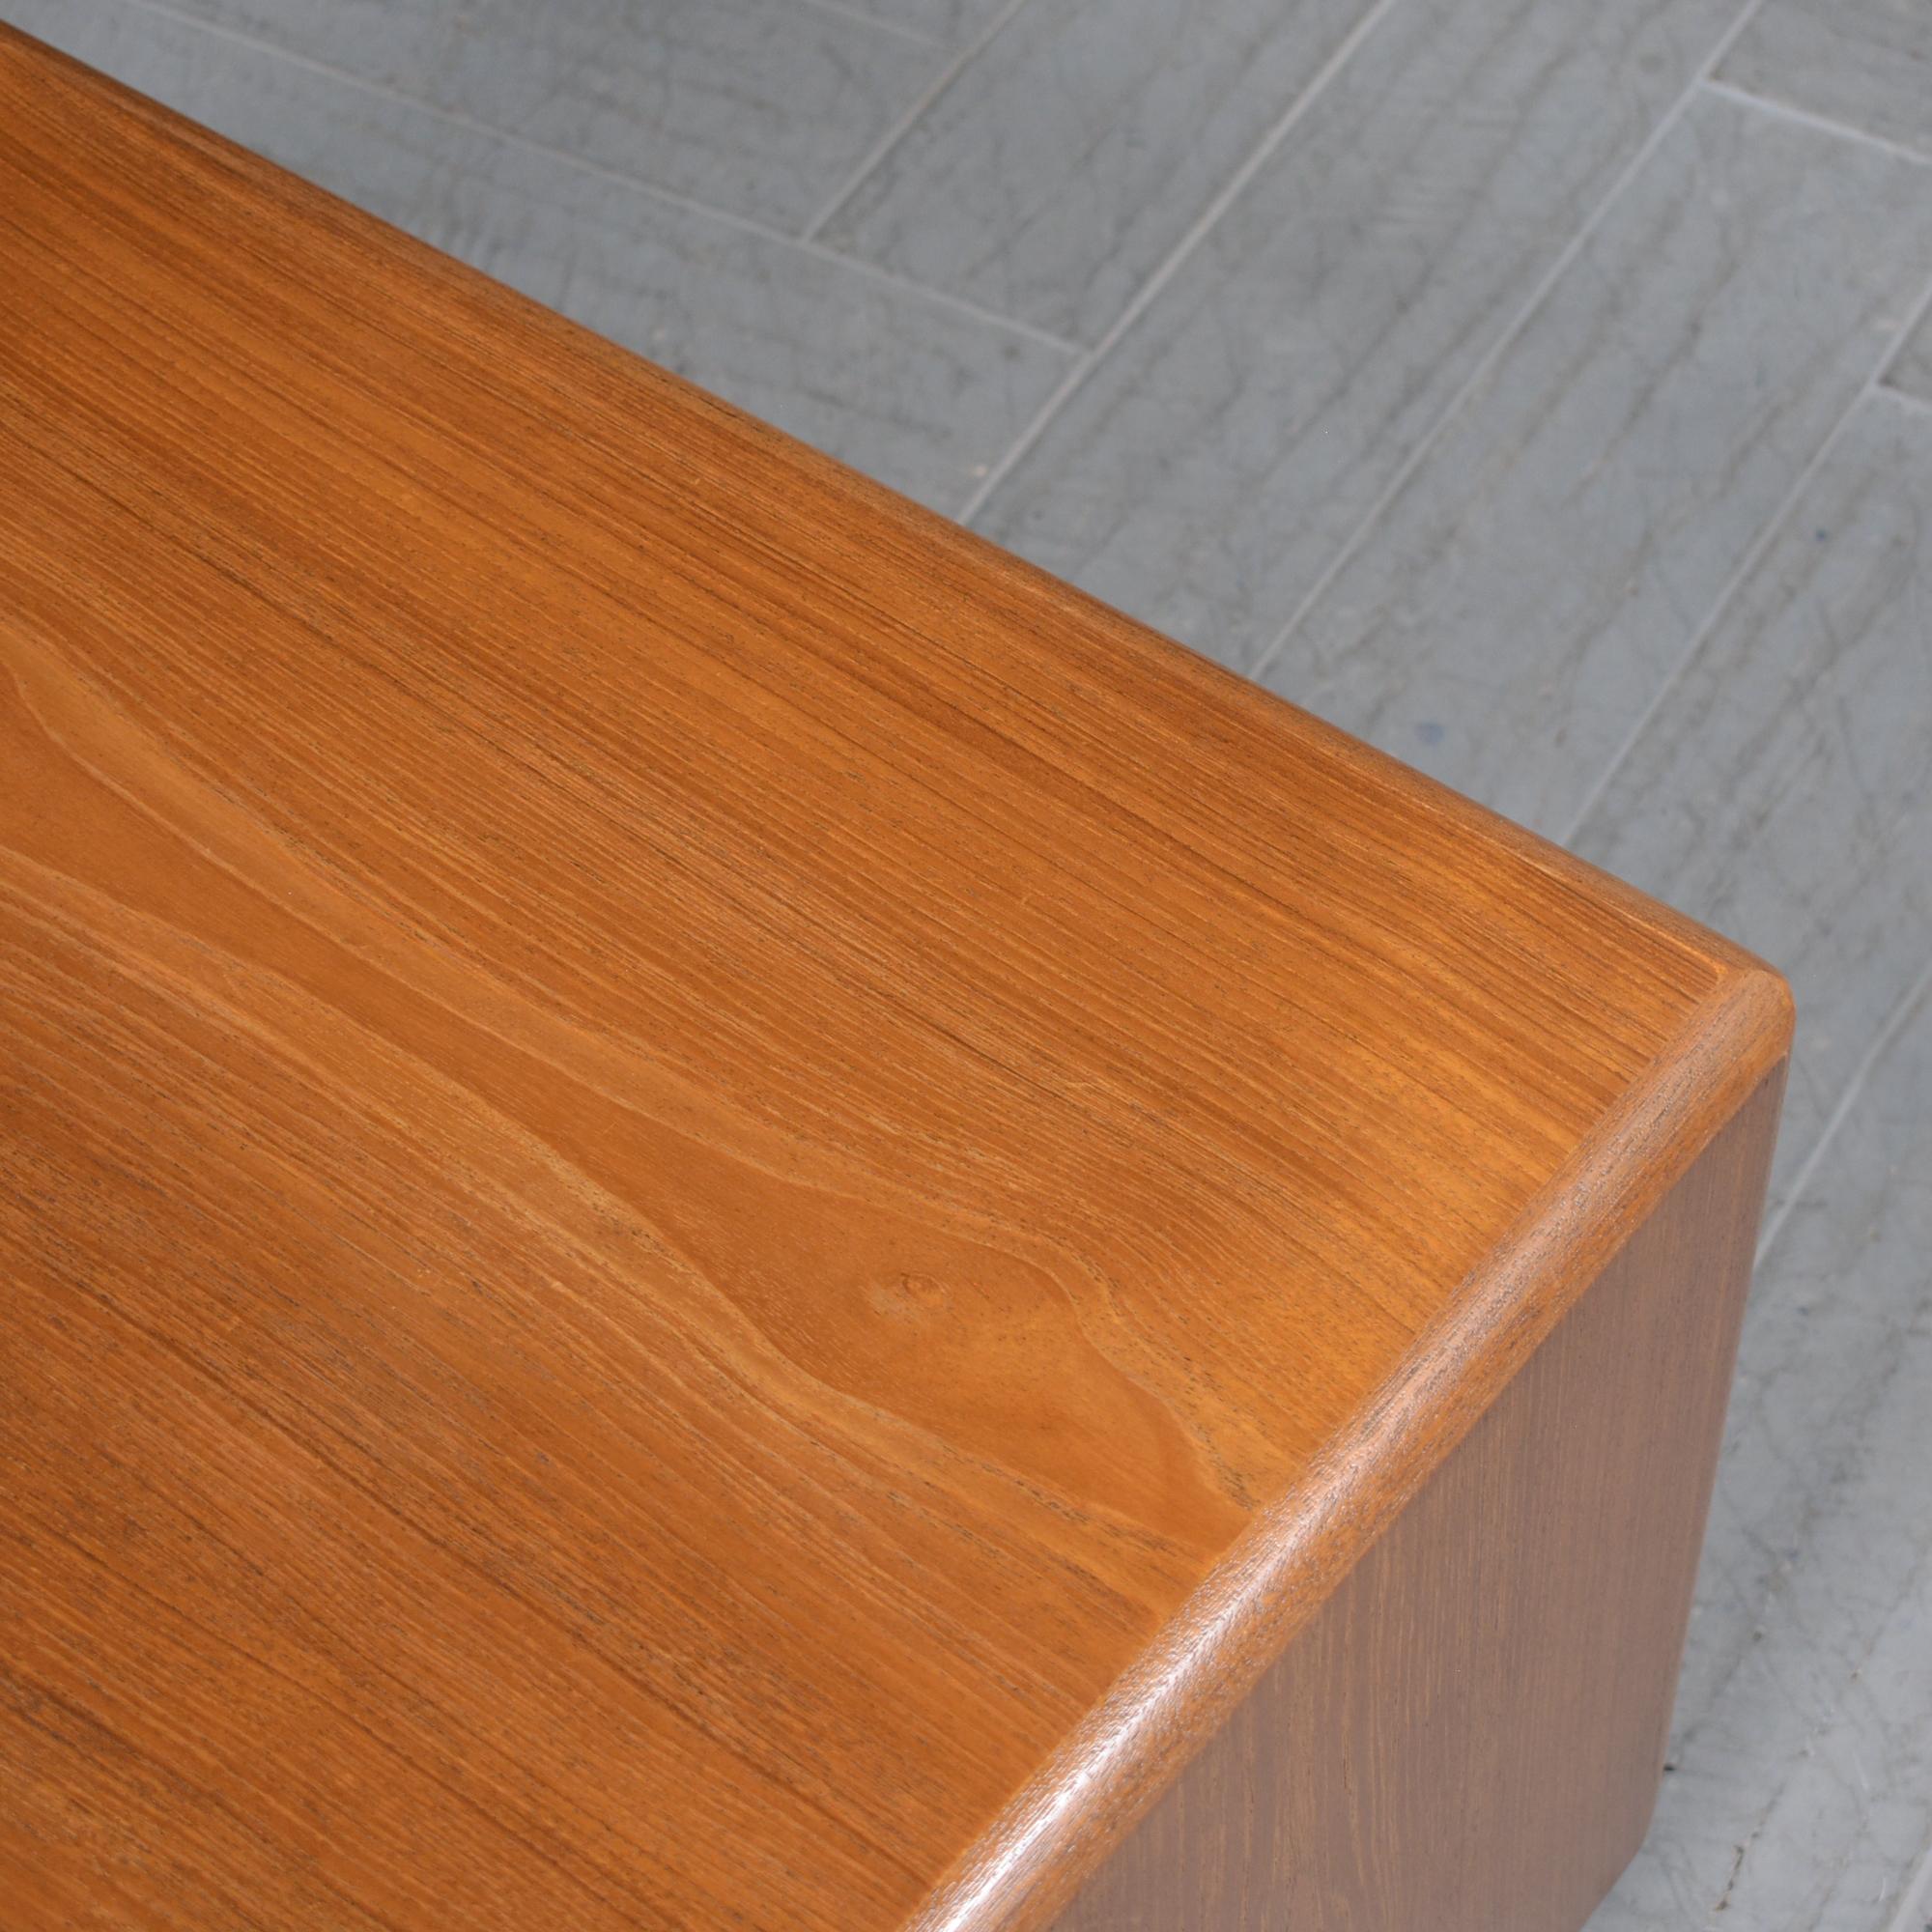 Vintage 1960s Teak Wood Waterfall Side Table - Fully Restored and Sleek Design For Sale 1